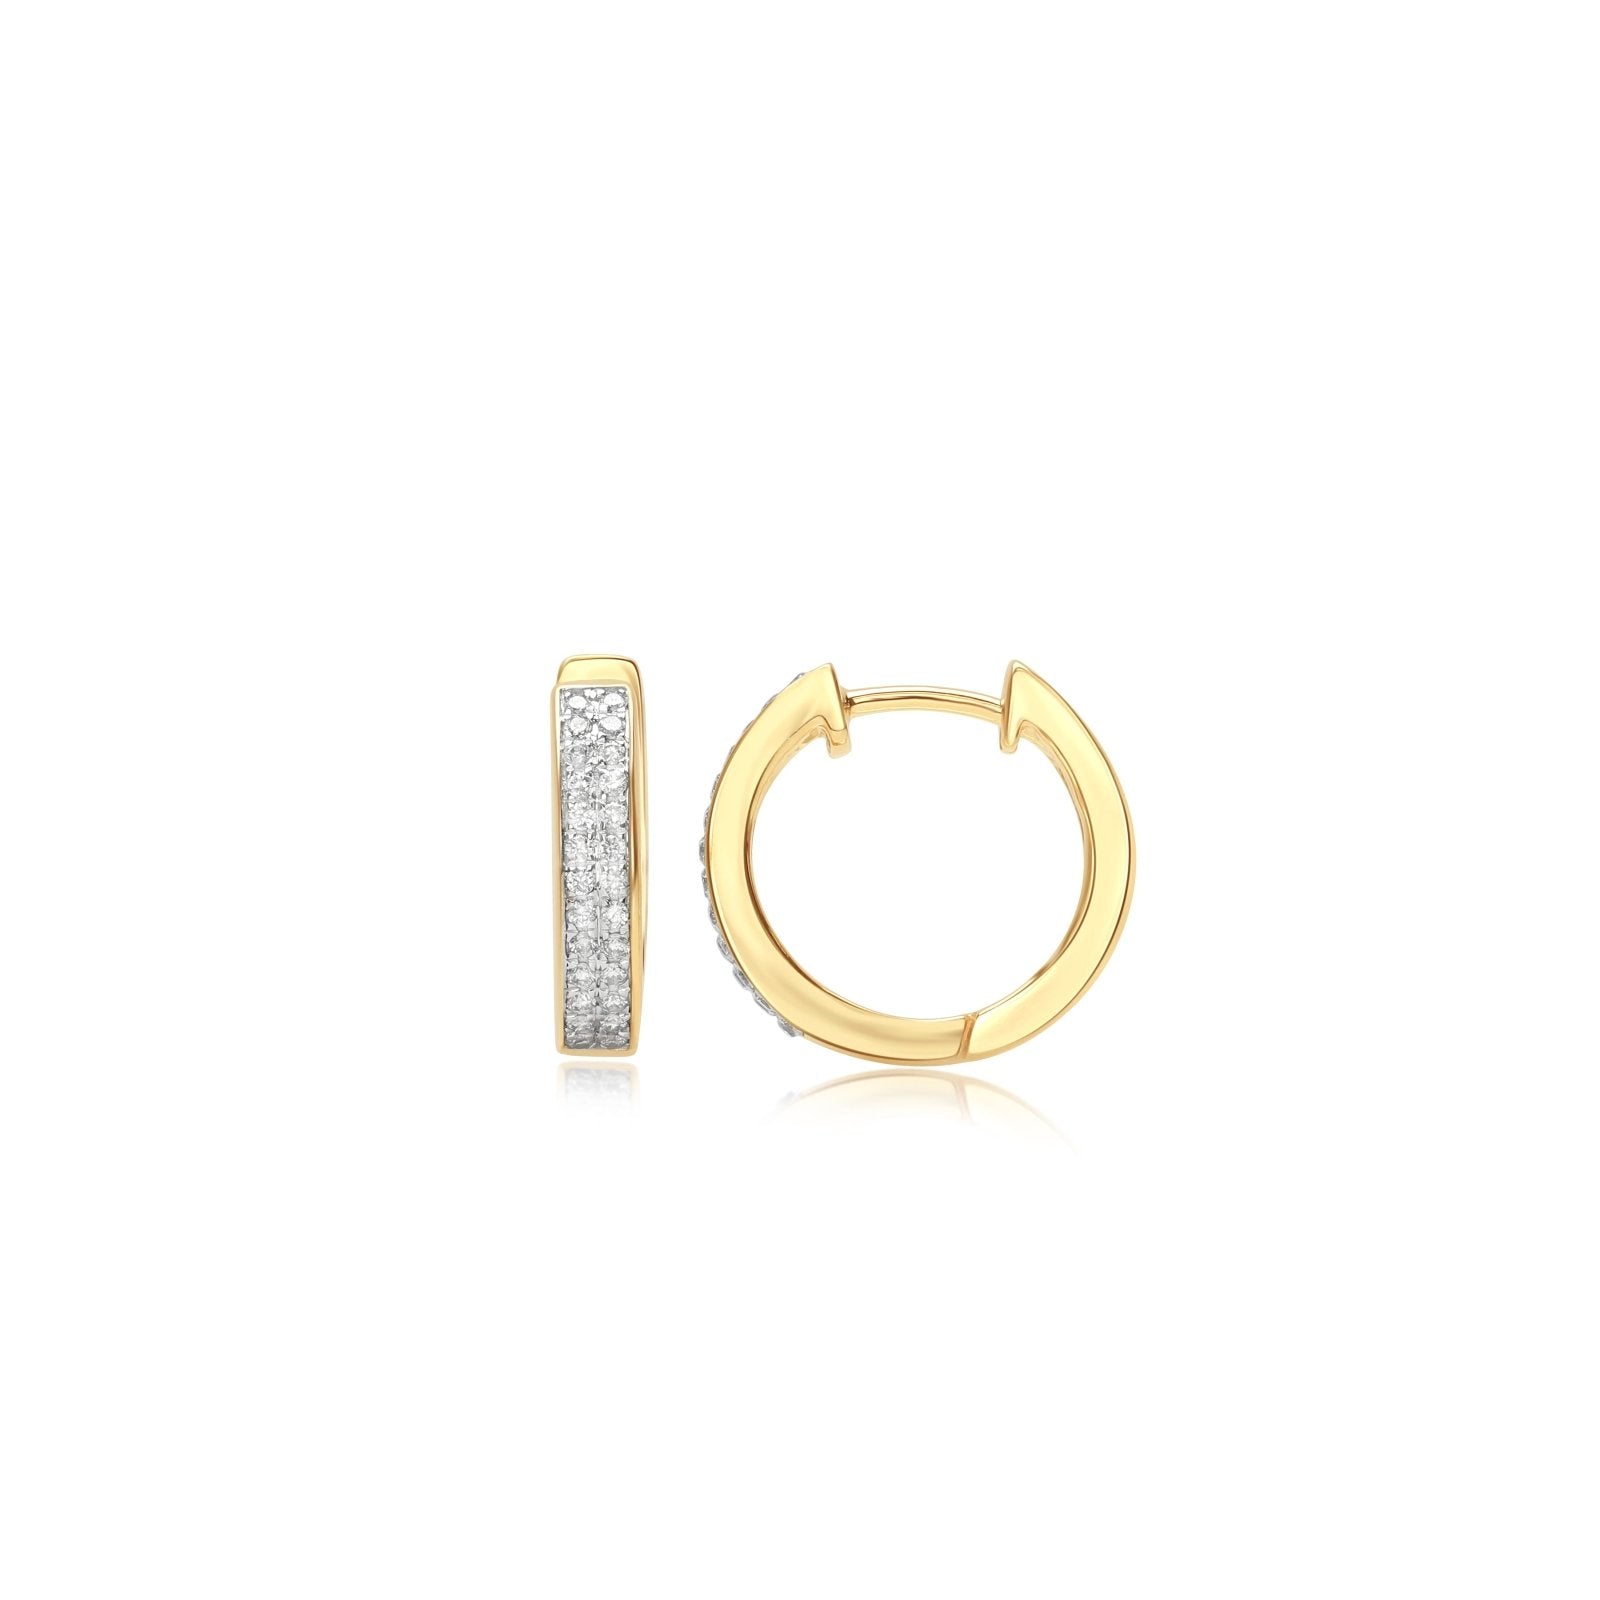 Double Diamond Hoops Earrings Estella Collection #product_description# 14k Birthstone Birthstone Earrings #tag4# #tag5# #tag6# #tag7# #tag8# #tag9# #tag10#